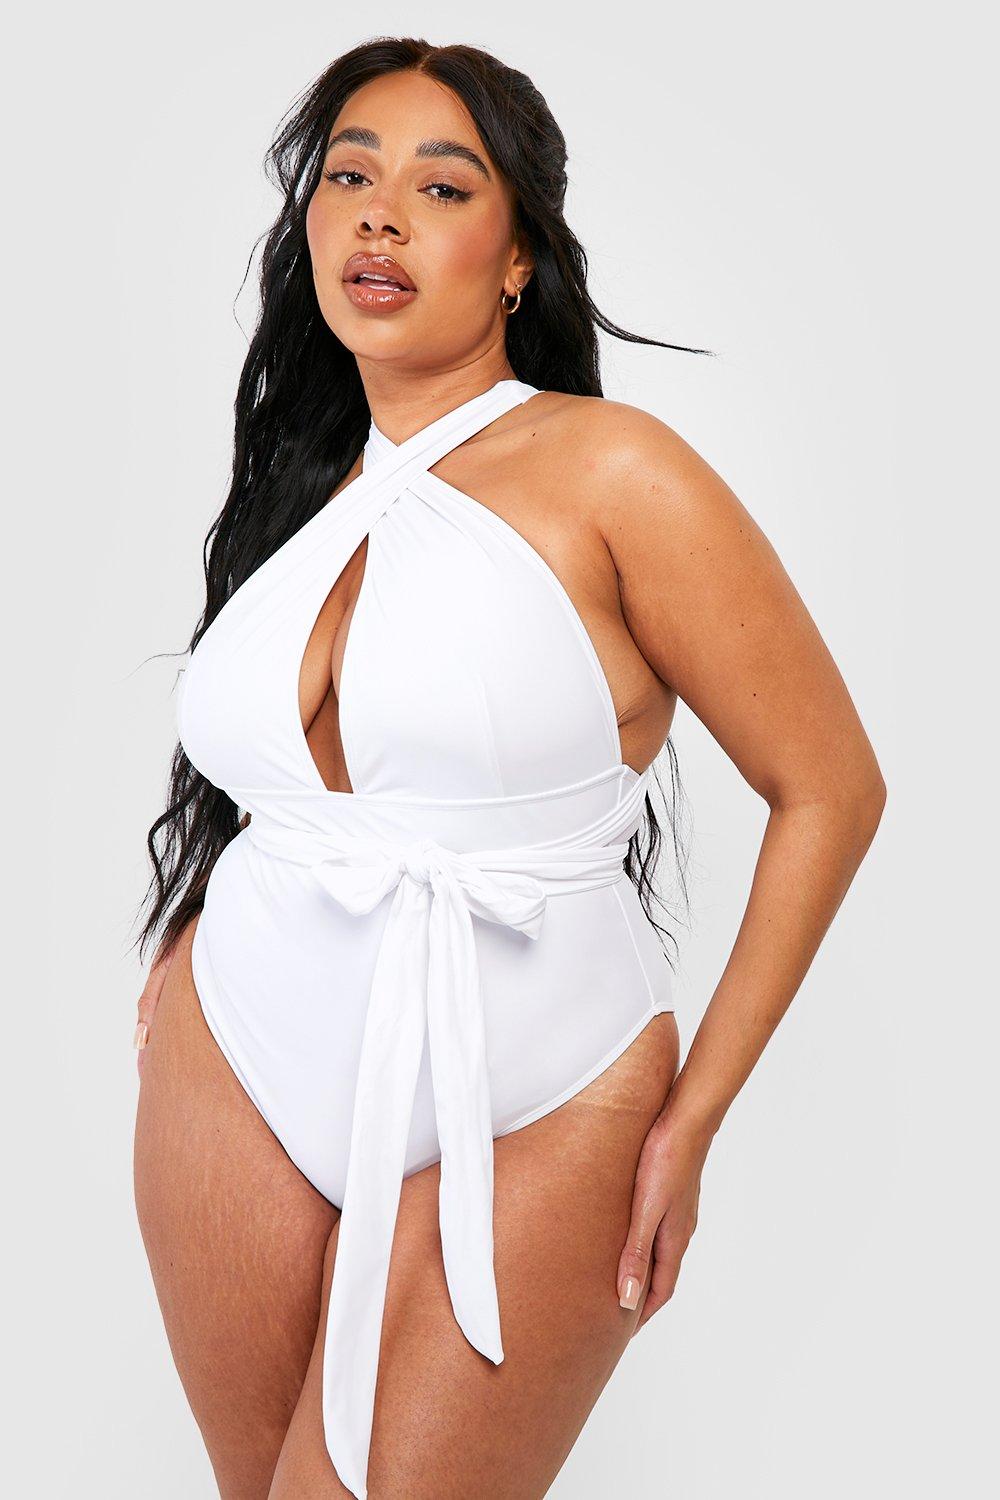 Tawop Plus Size Swimsuit For Women Tummy Control Fashion Women Sexy Solid  Hollow Beach Bikini Cover Up Swimsuit White Size Xl 